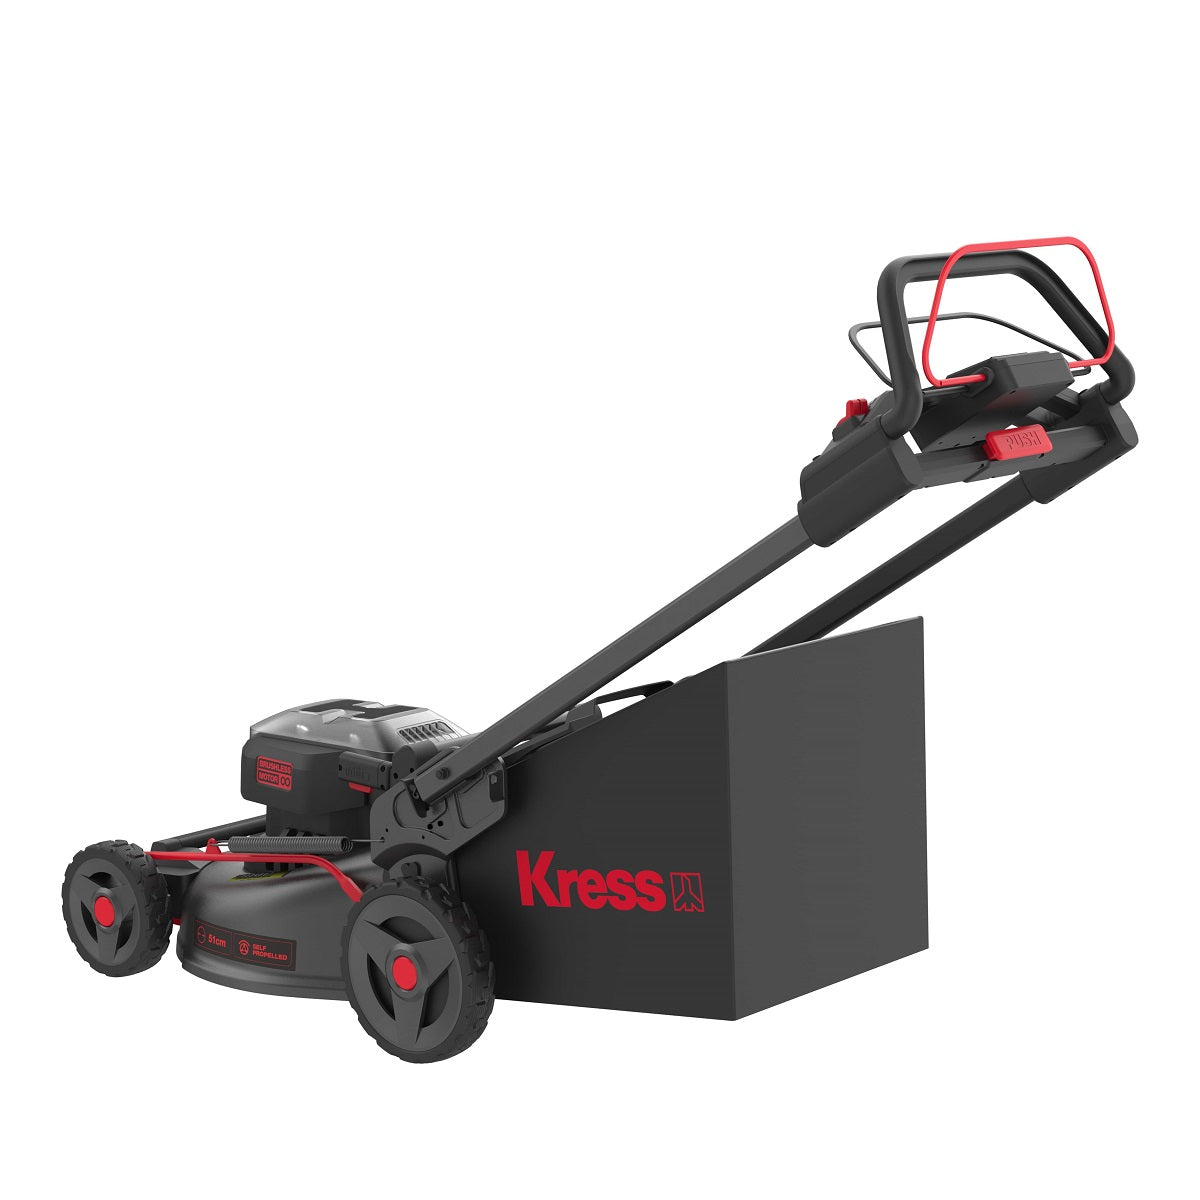 Kress KG760E 60V BL 51cm Self-Propelled Mower + 1x 4Ah Battery 1x 5A Charger